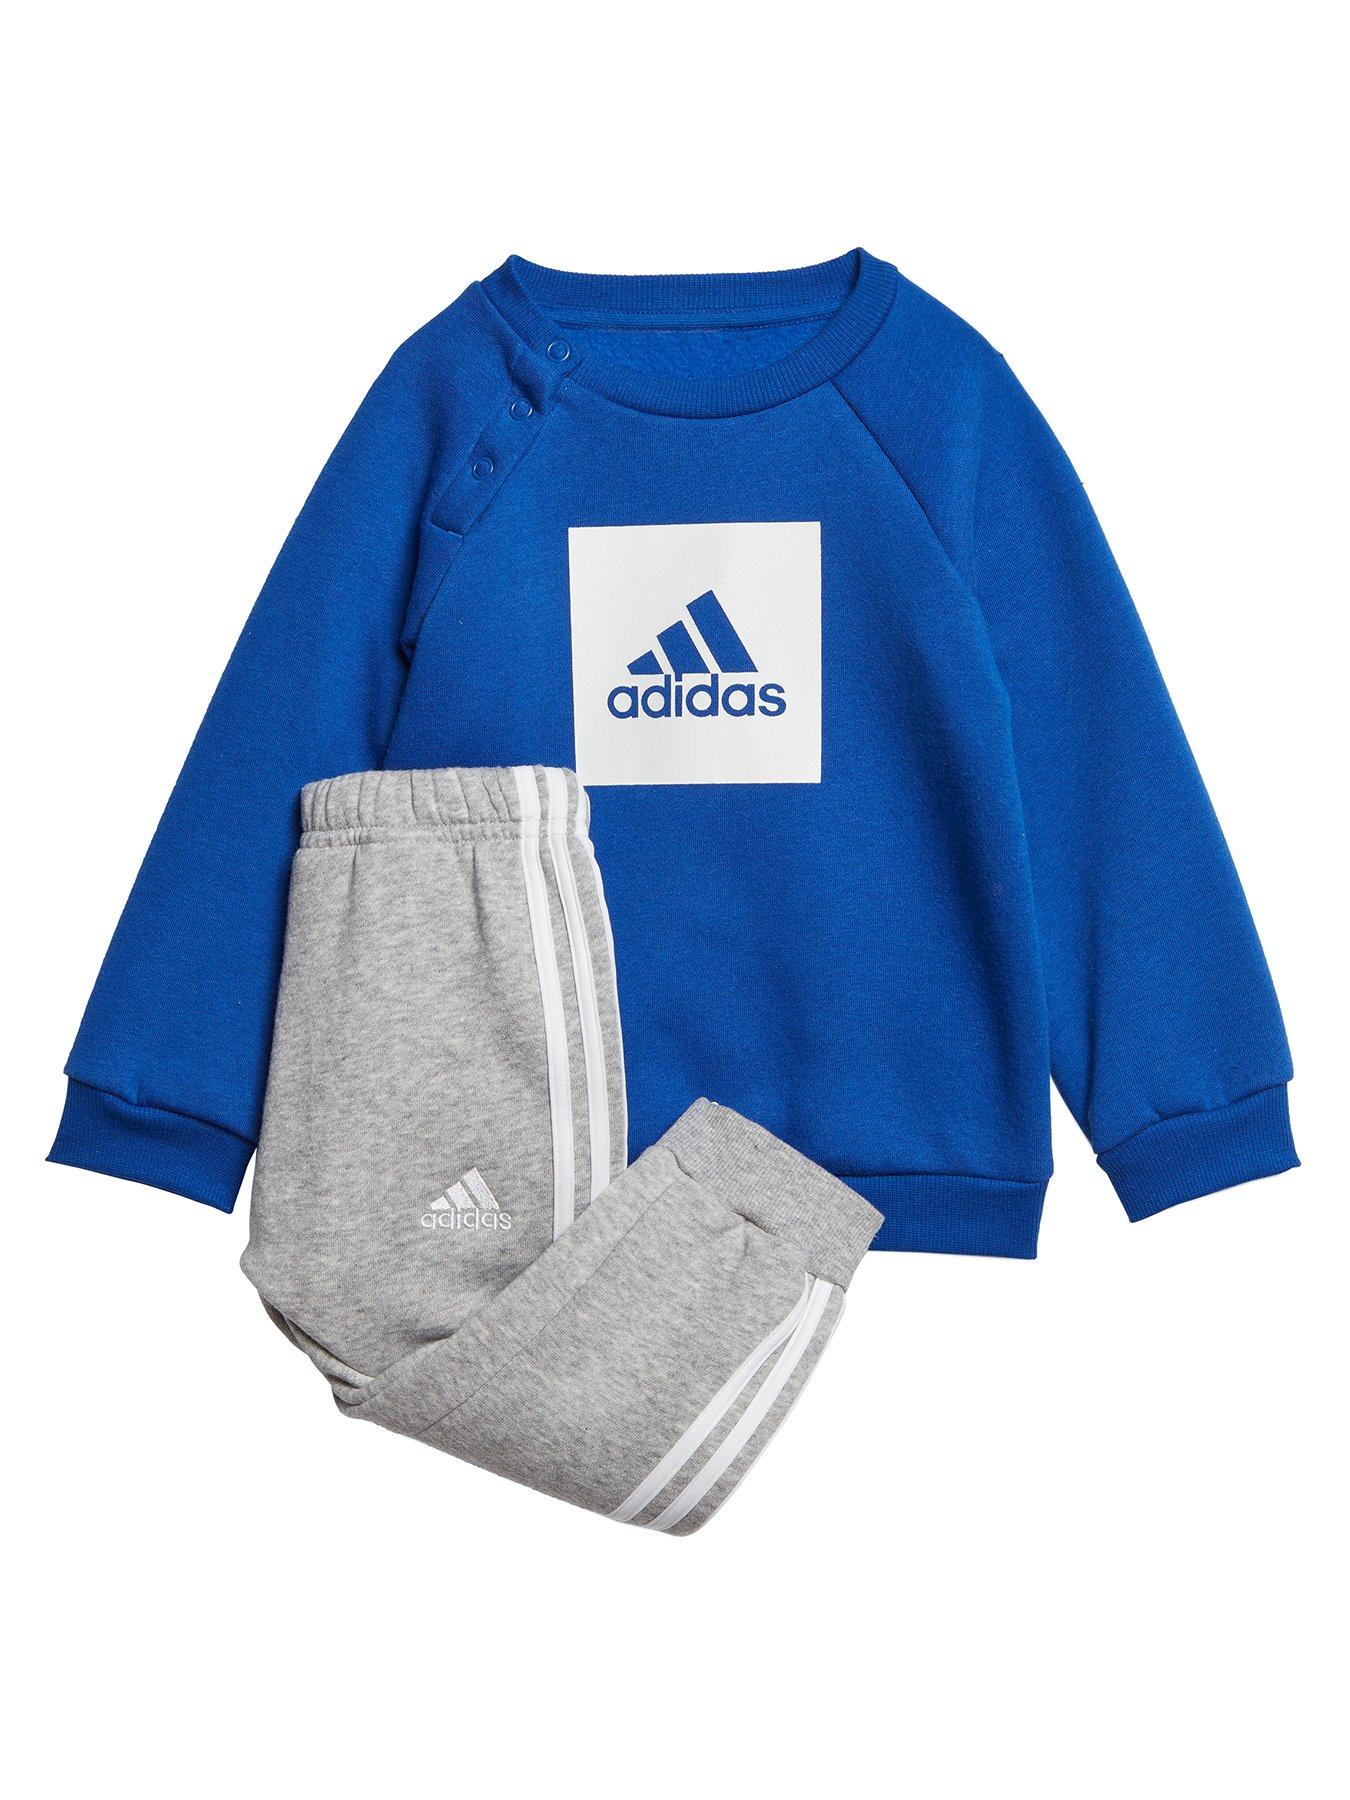 0/3 months | Adidas | Child \u0026 baby | www.very.co.uk